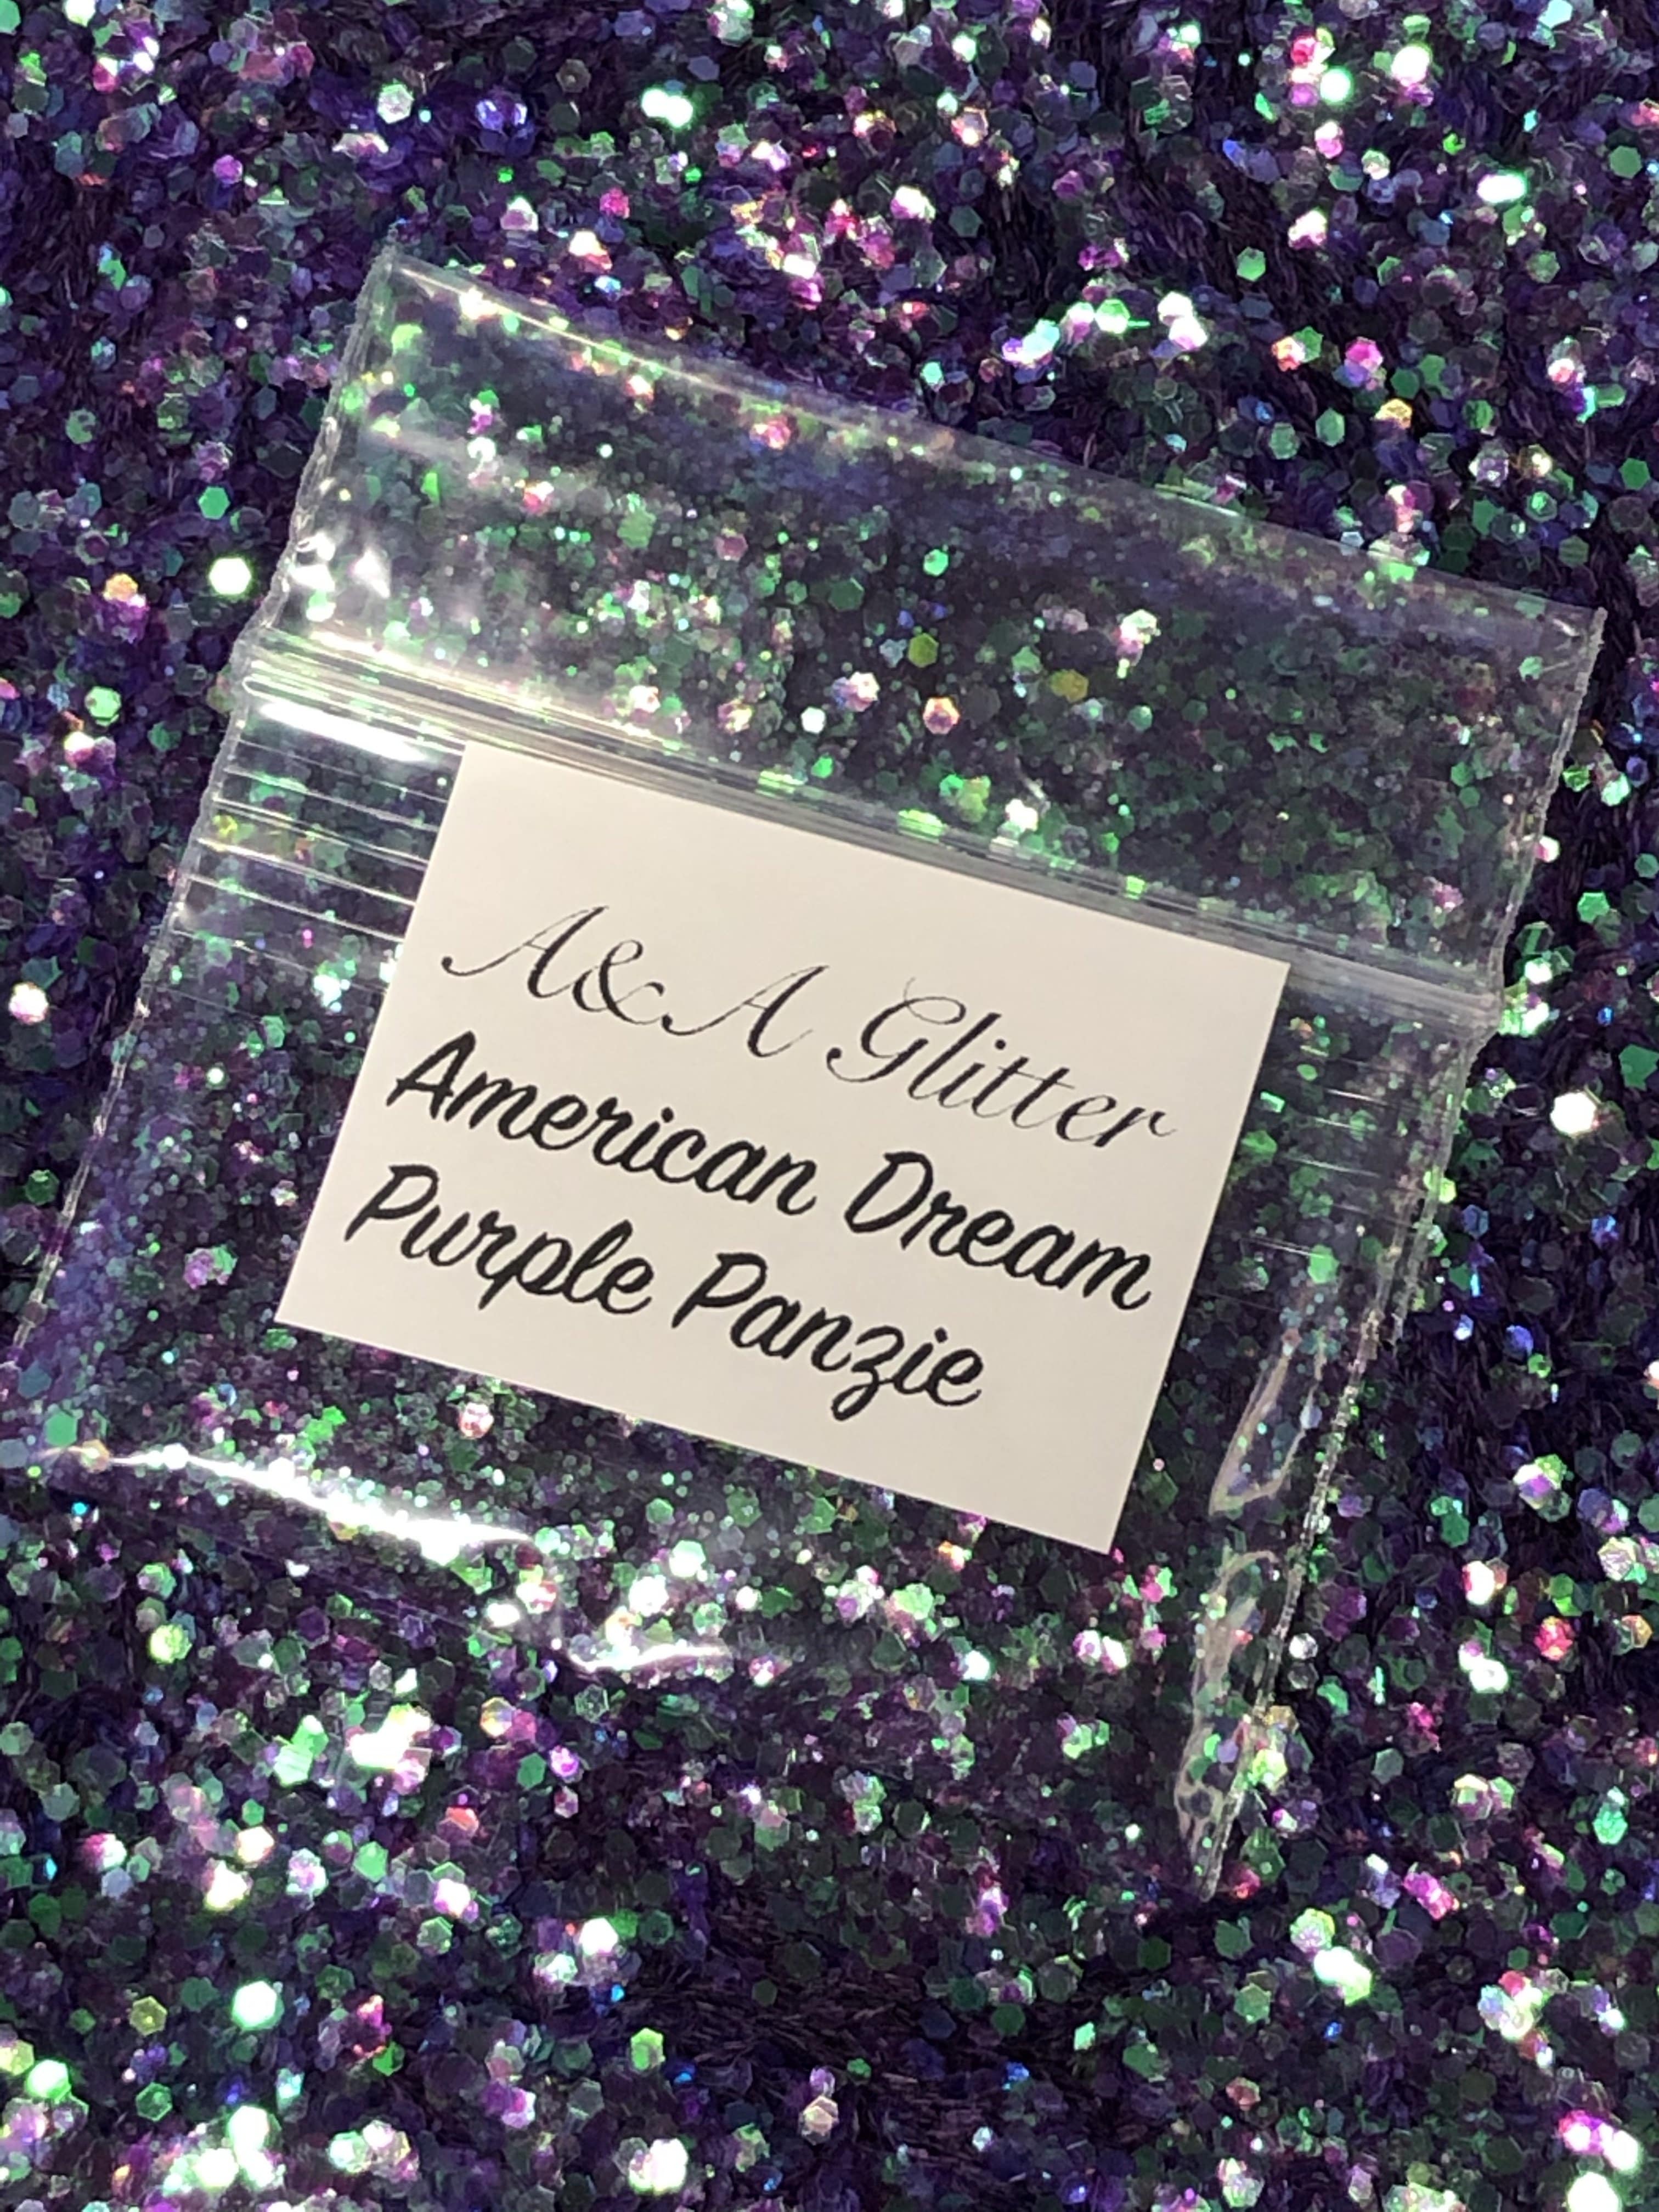 American Dream Glitter Keychain – American Dream Shops